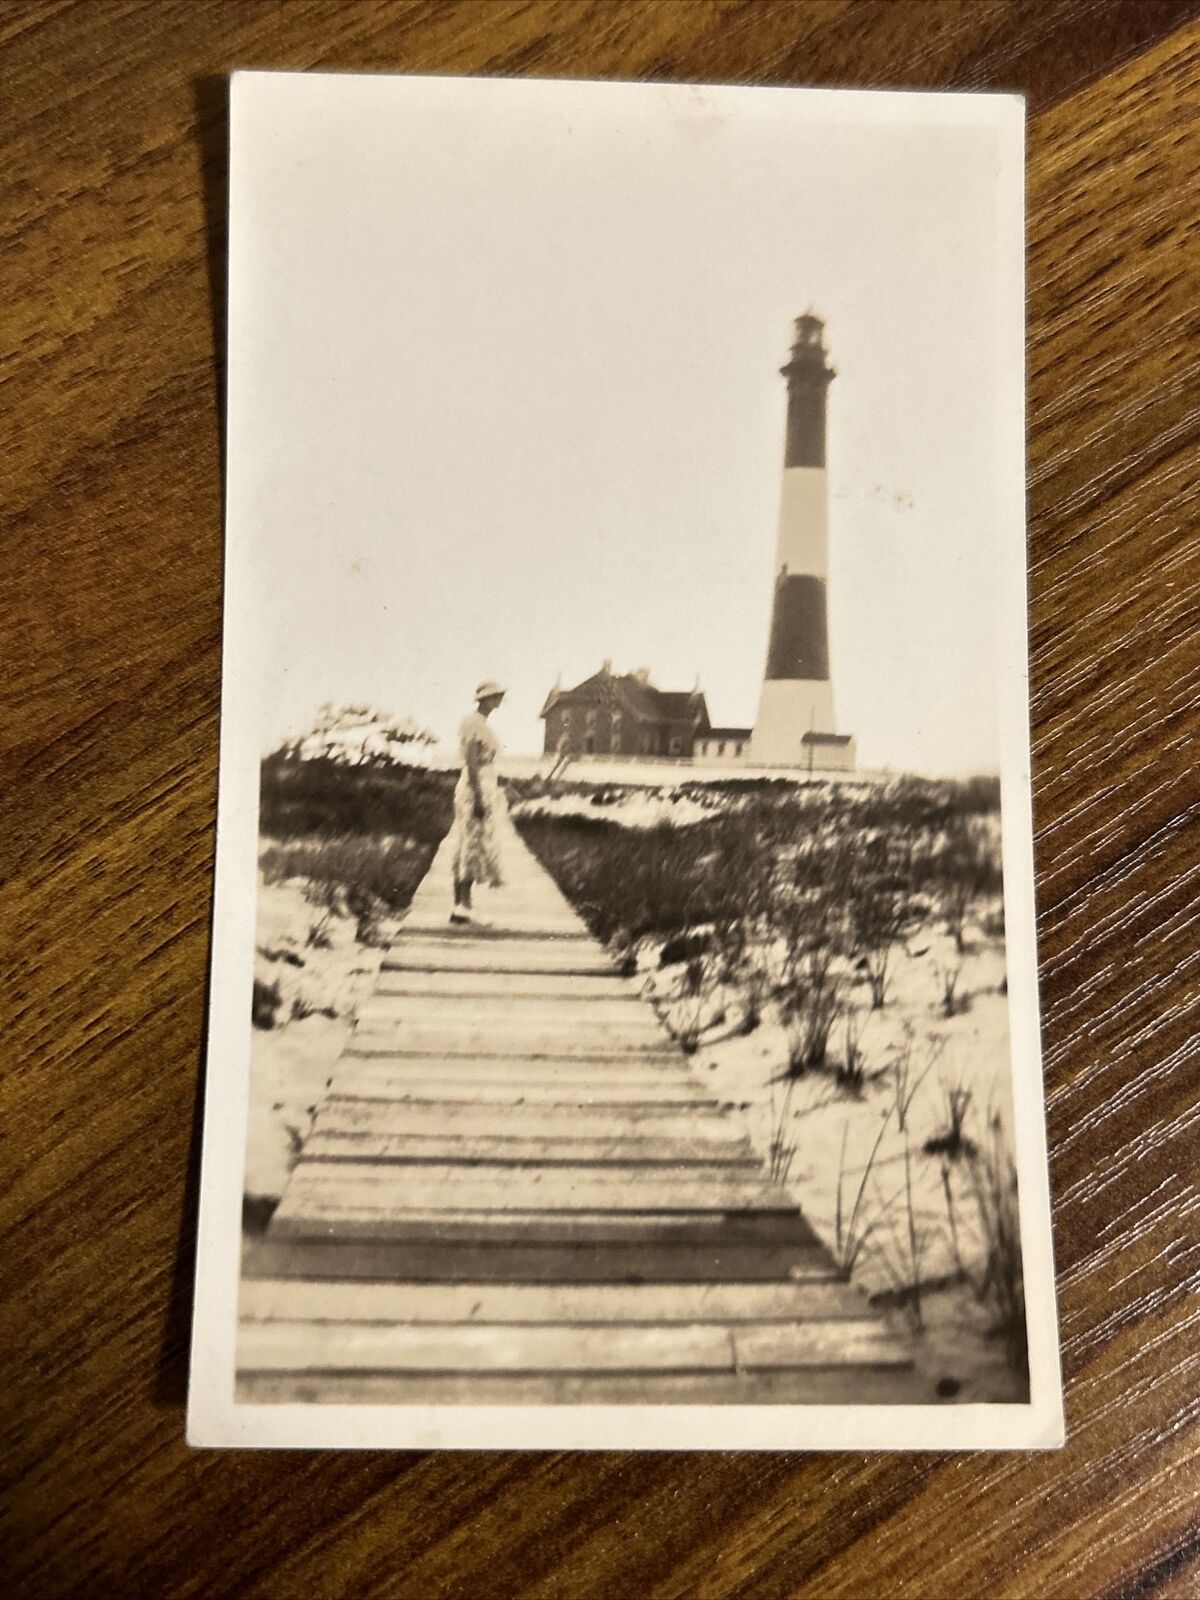 Lighthouse & Woman on Pier Sand Dunes 1930s B&W Vintage Photo T2